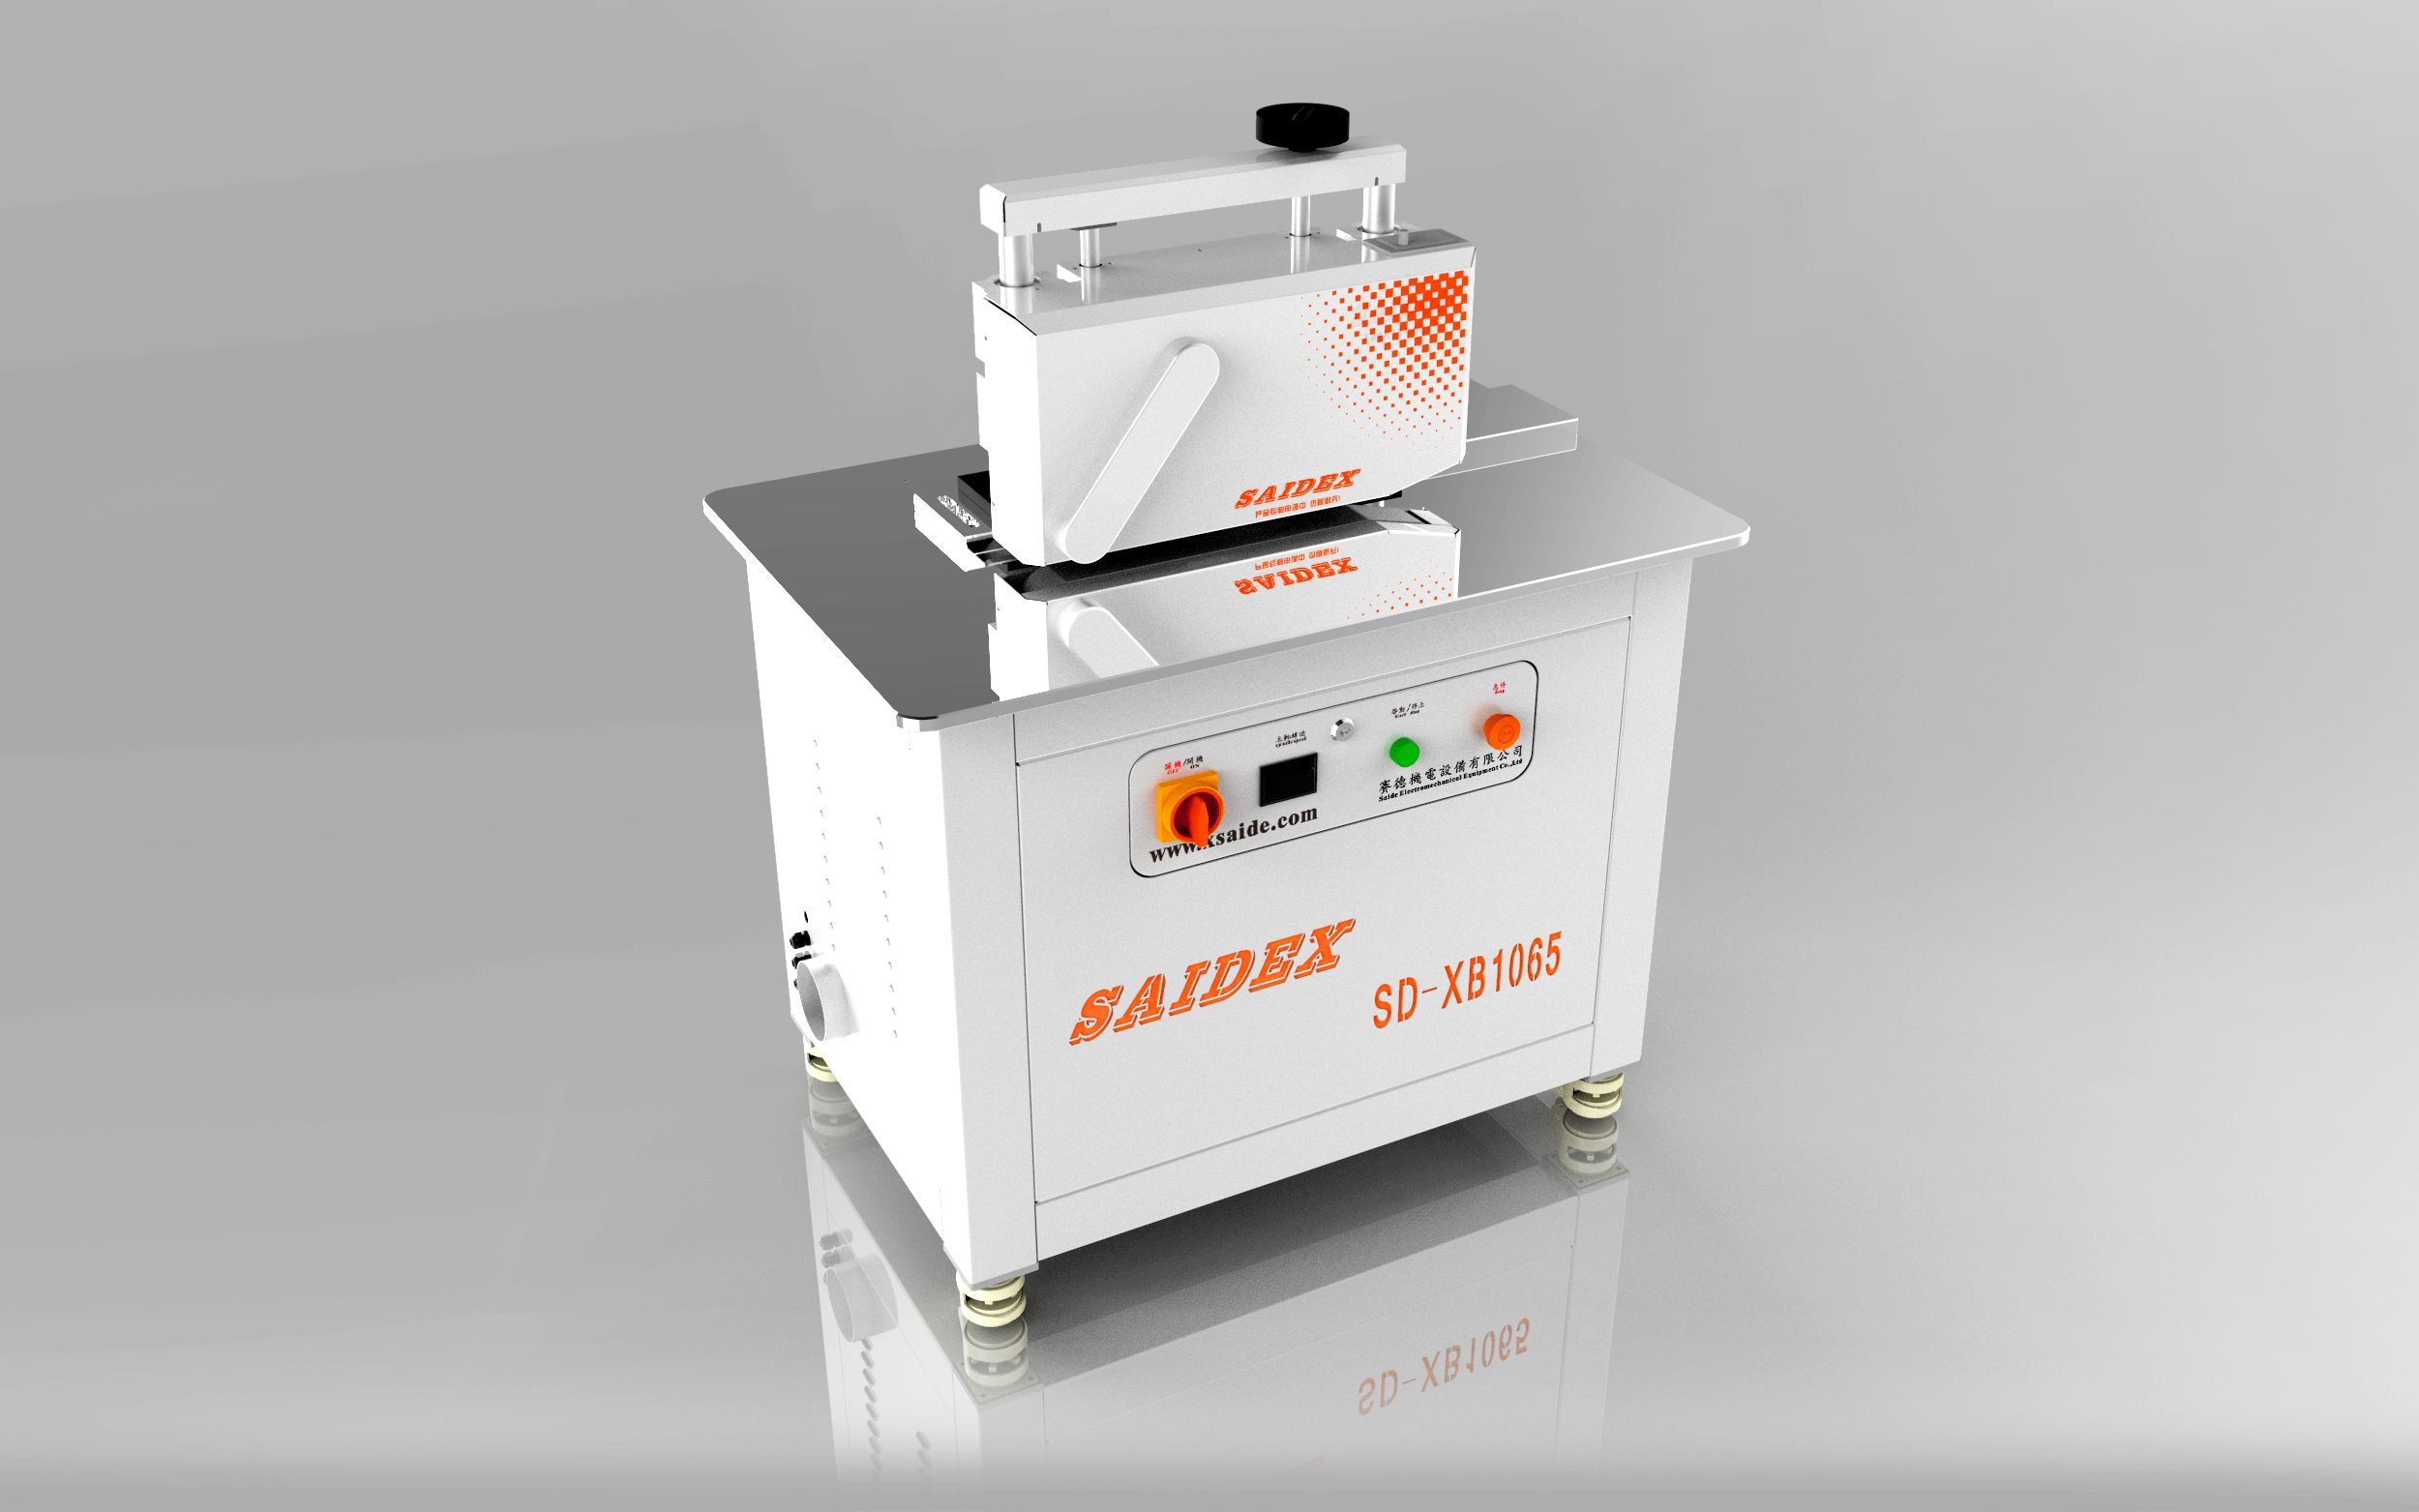 SD-XB1065 Acrylic, PS, PE Multi-function Trimming Machine